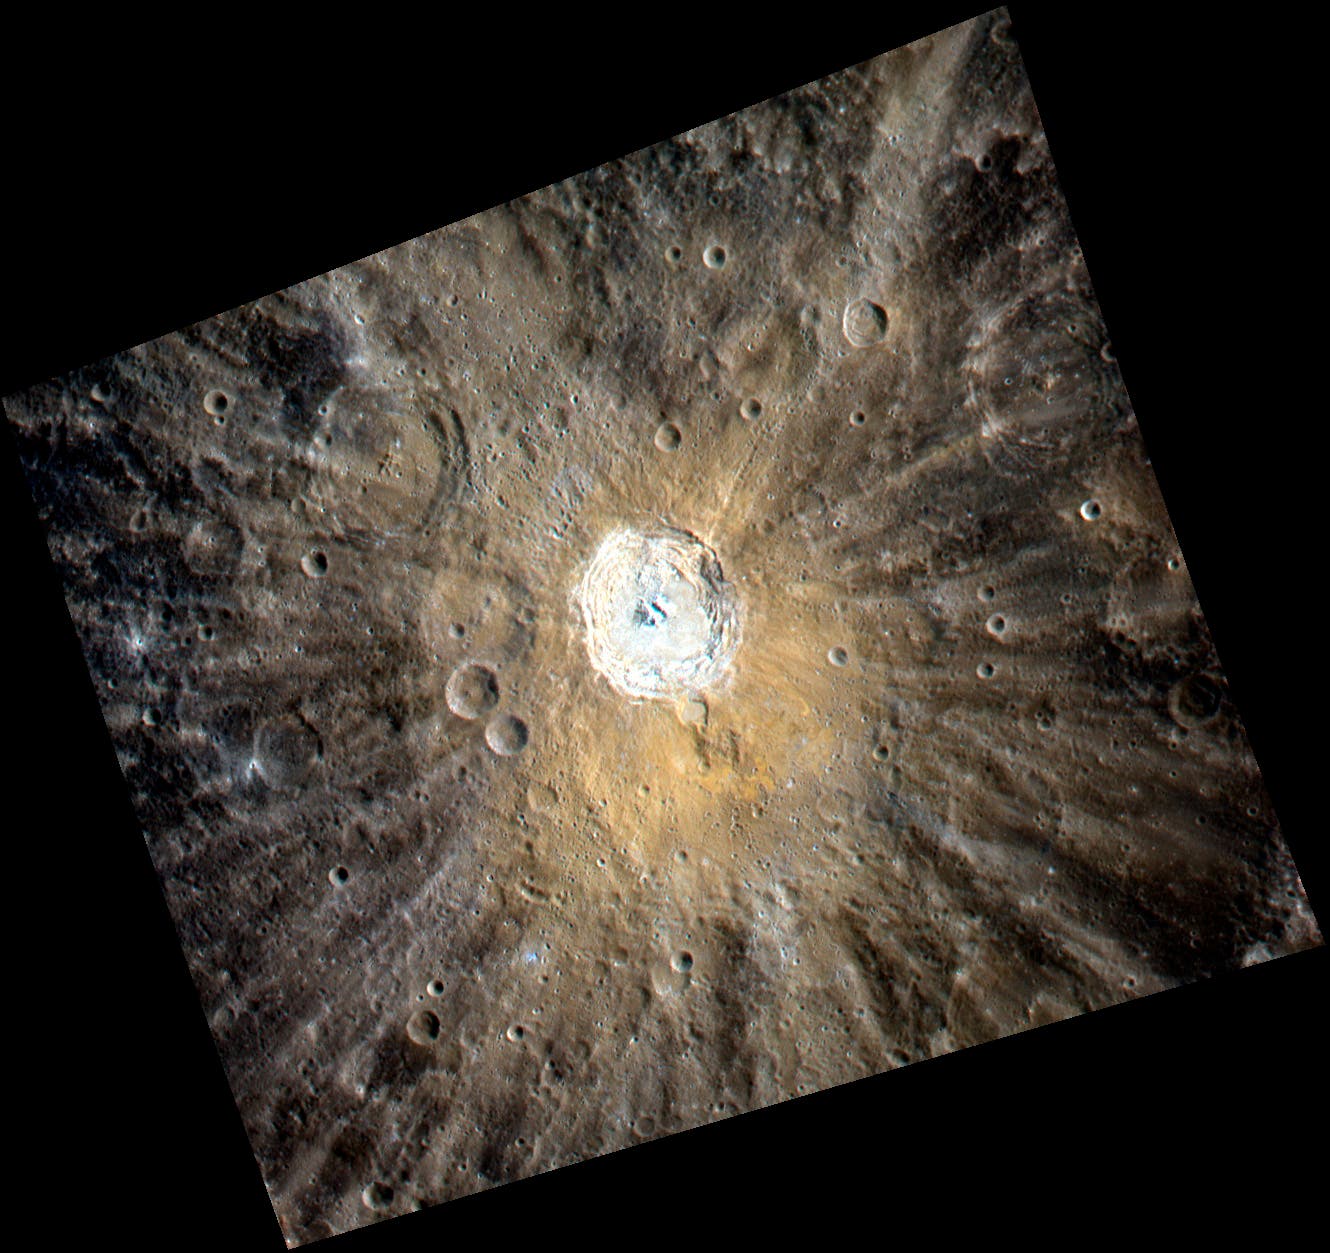 Krater Kuiper auf Merkur